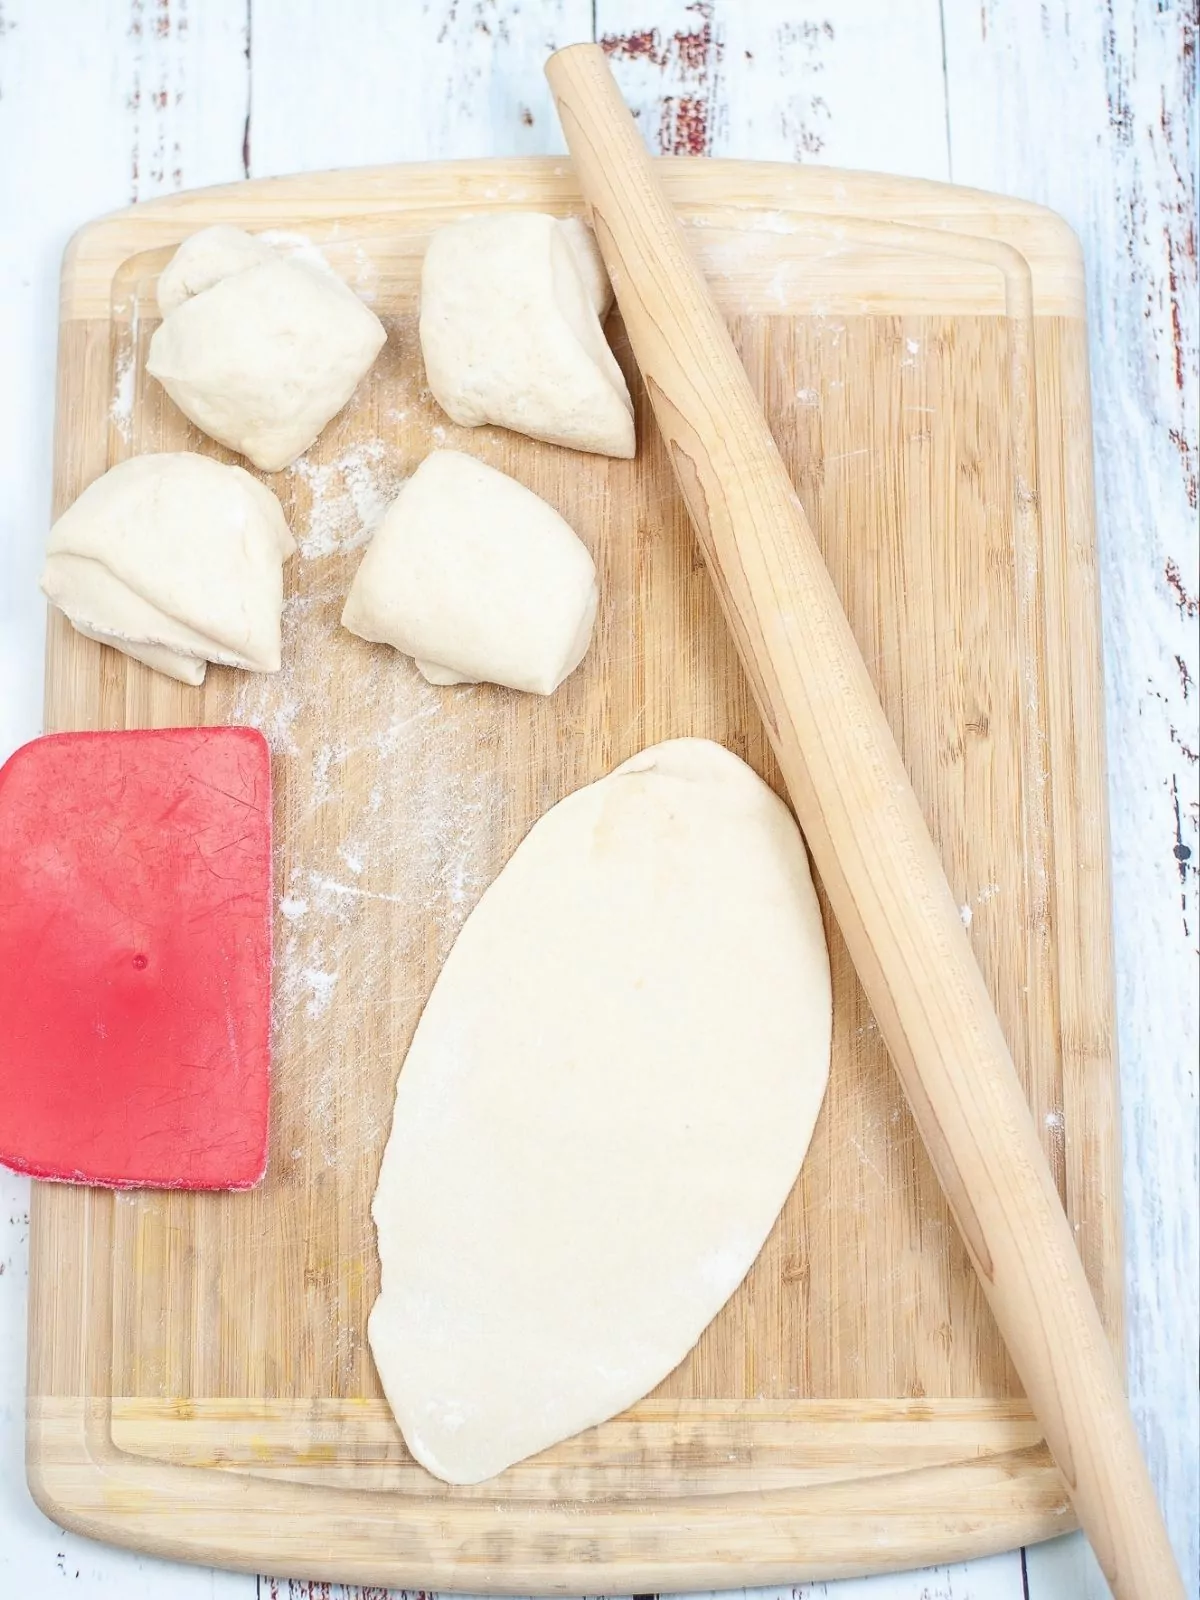 How to make flatbread.